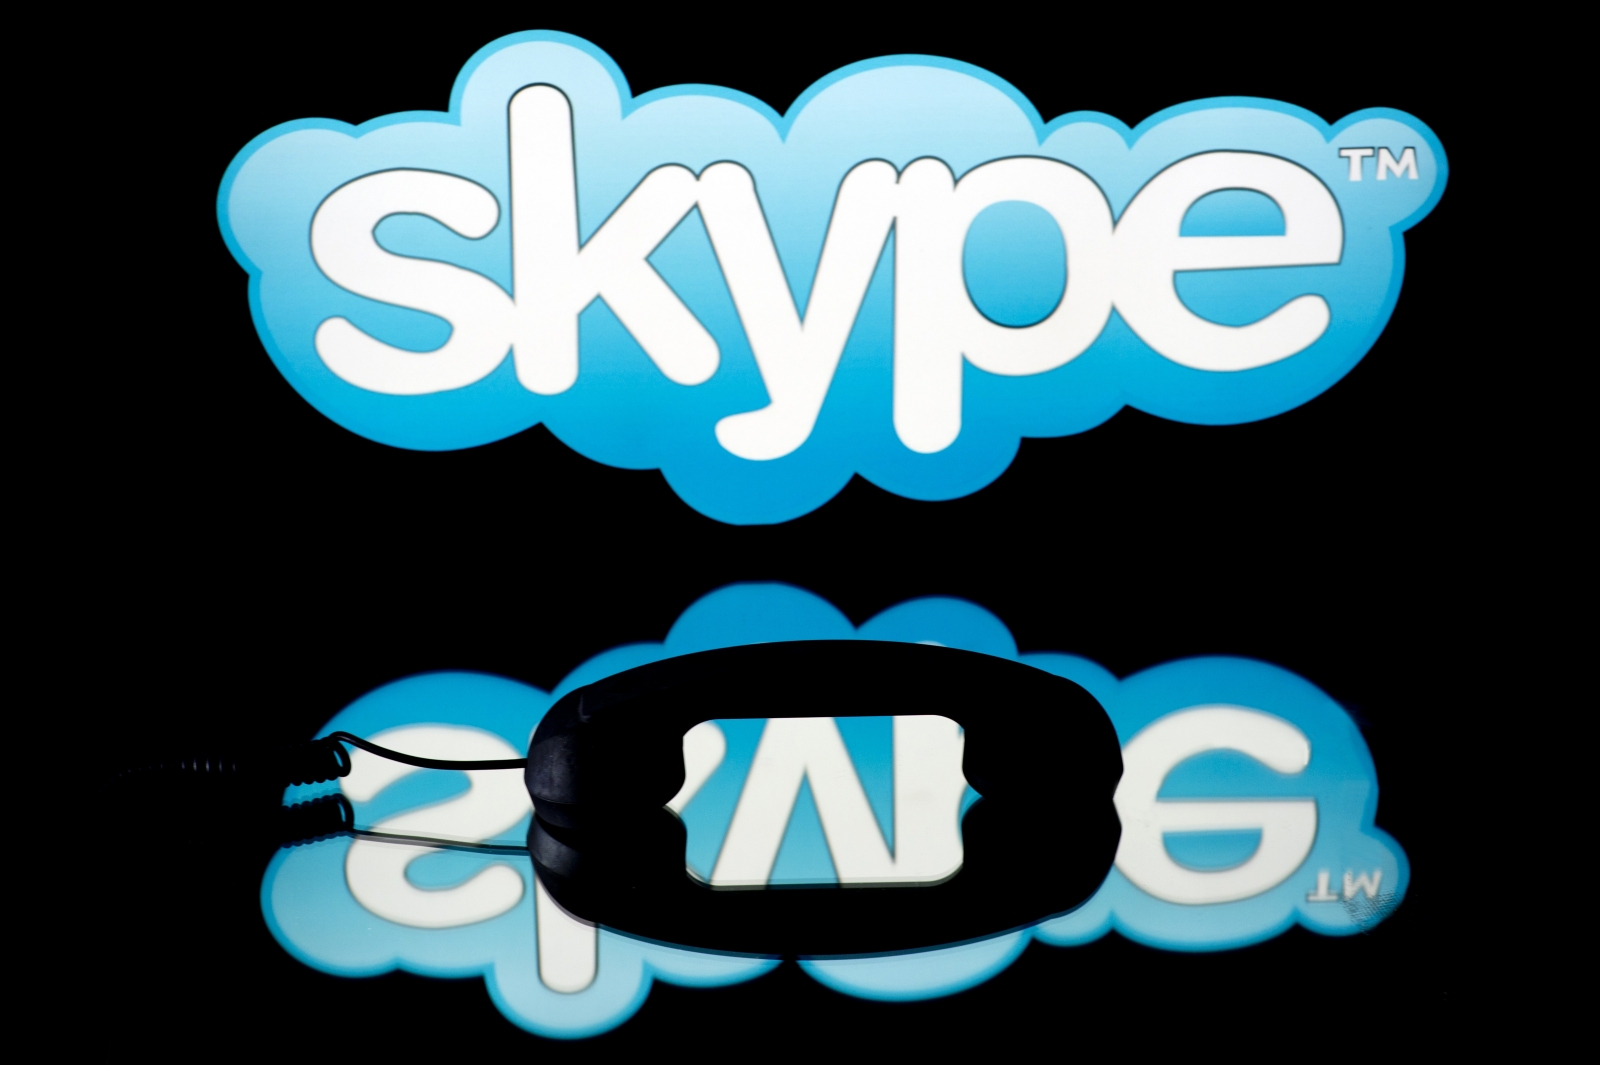 how to change skype name 2017